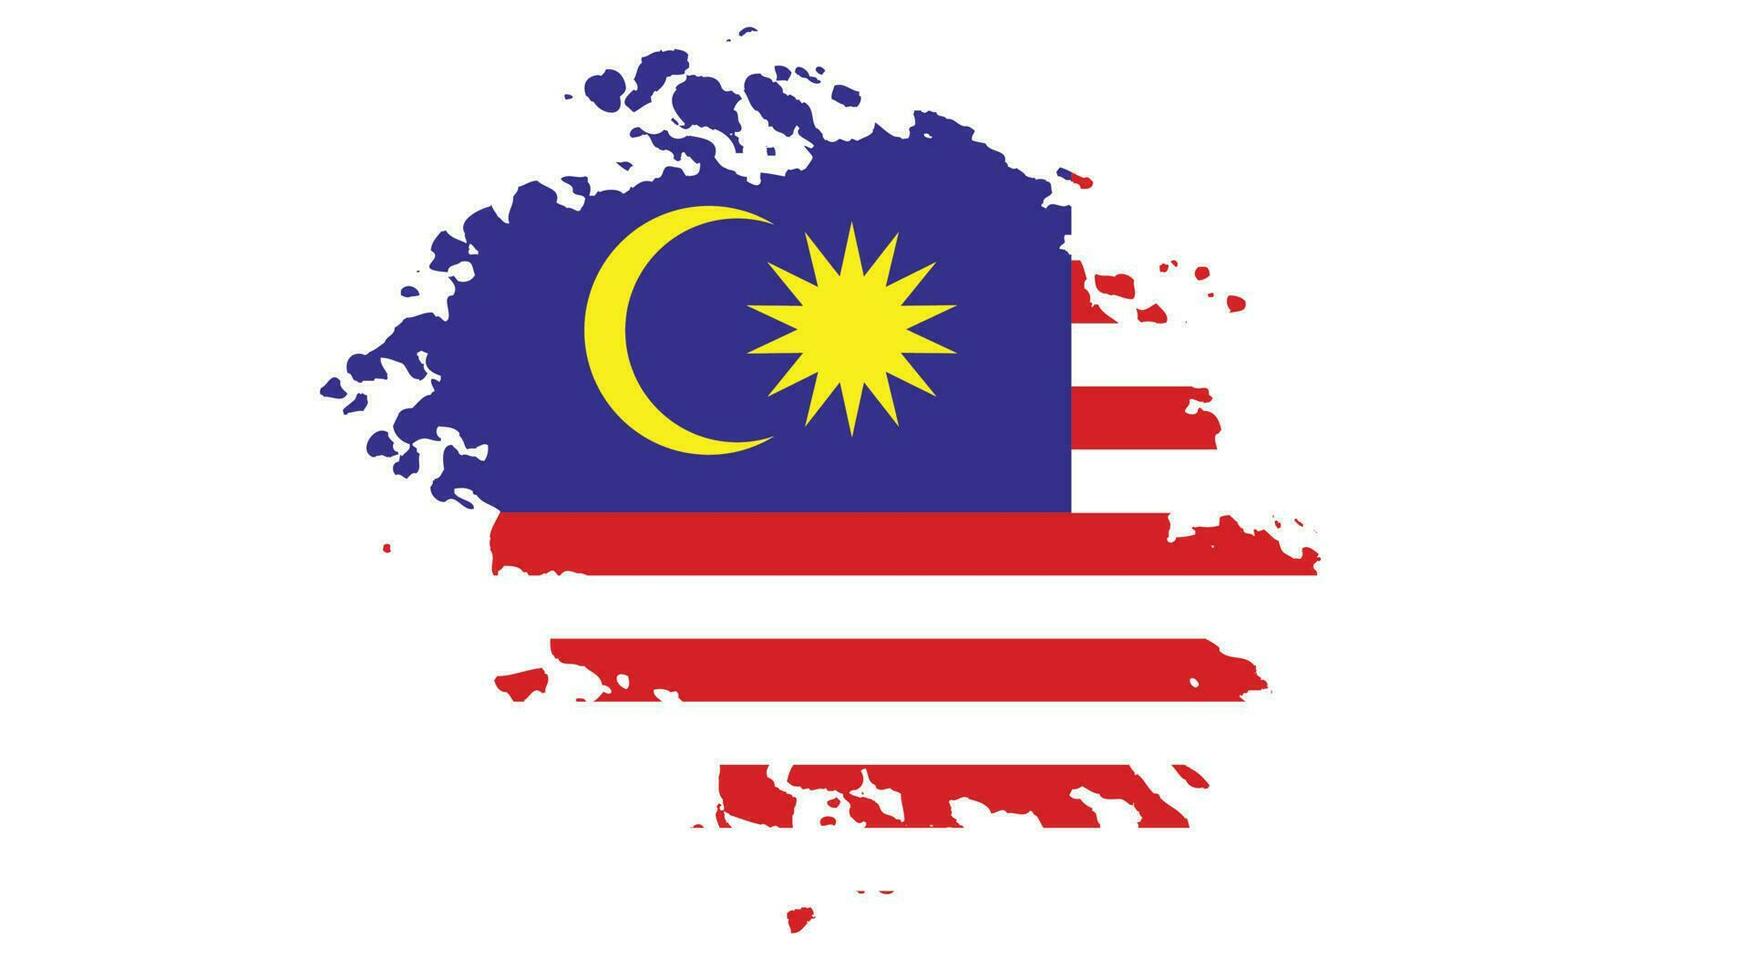 abstrakt malaysia grunge flagga vektor